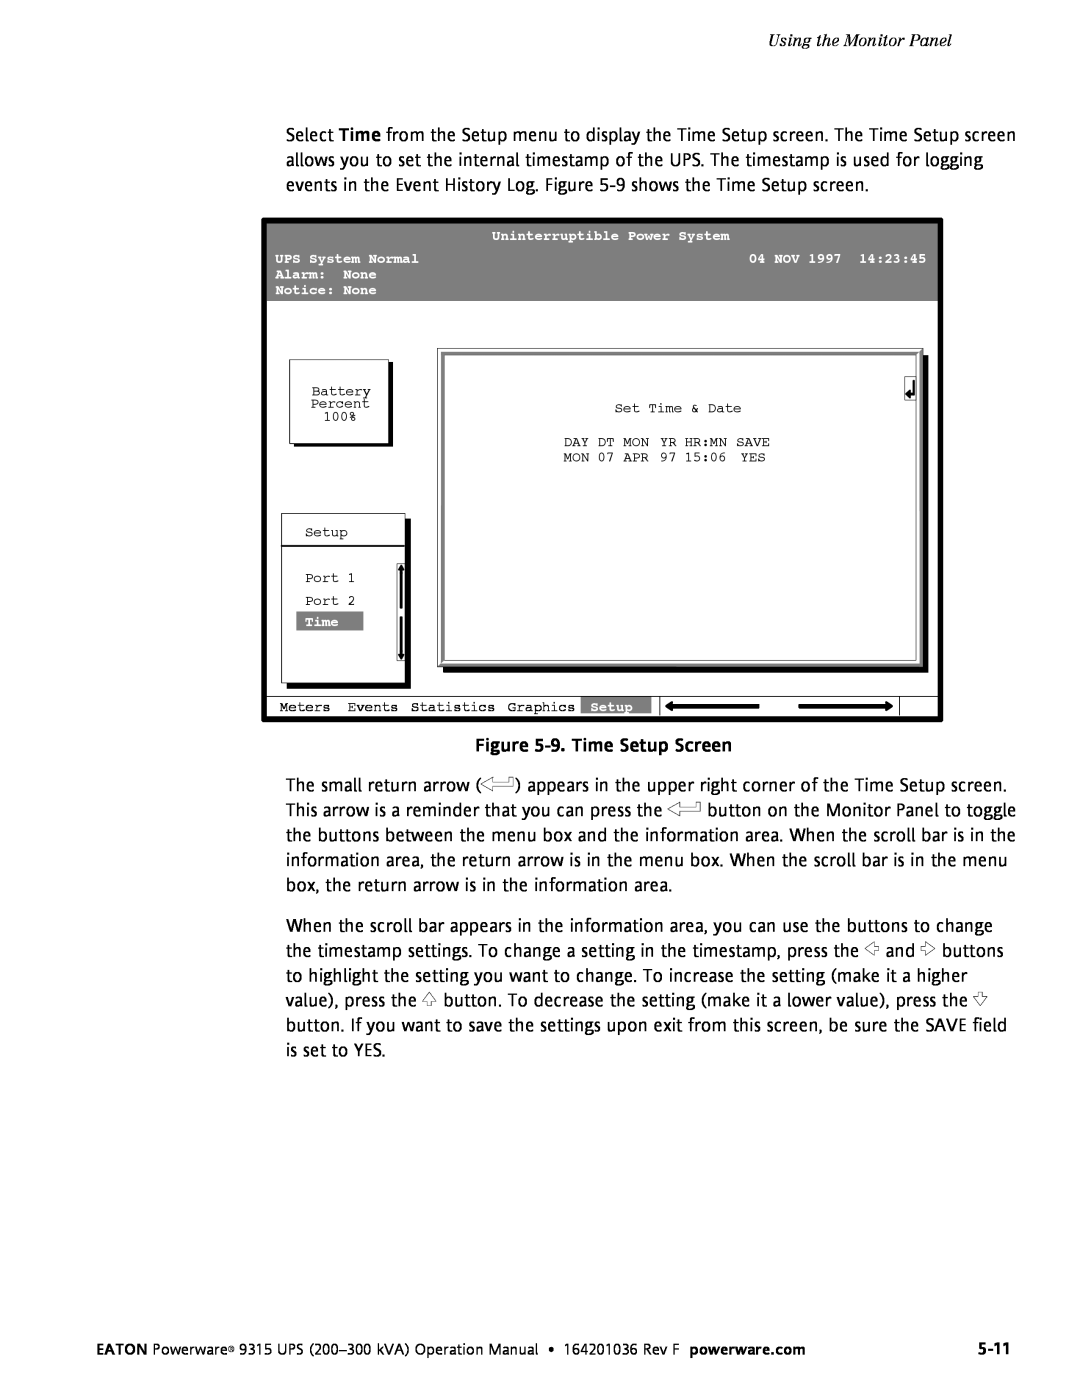 Eaton Electrical Powerware 9315 operation manual 9. Time Setup Screen 